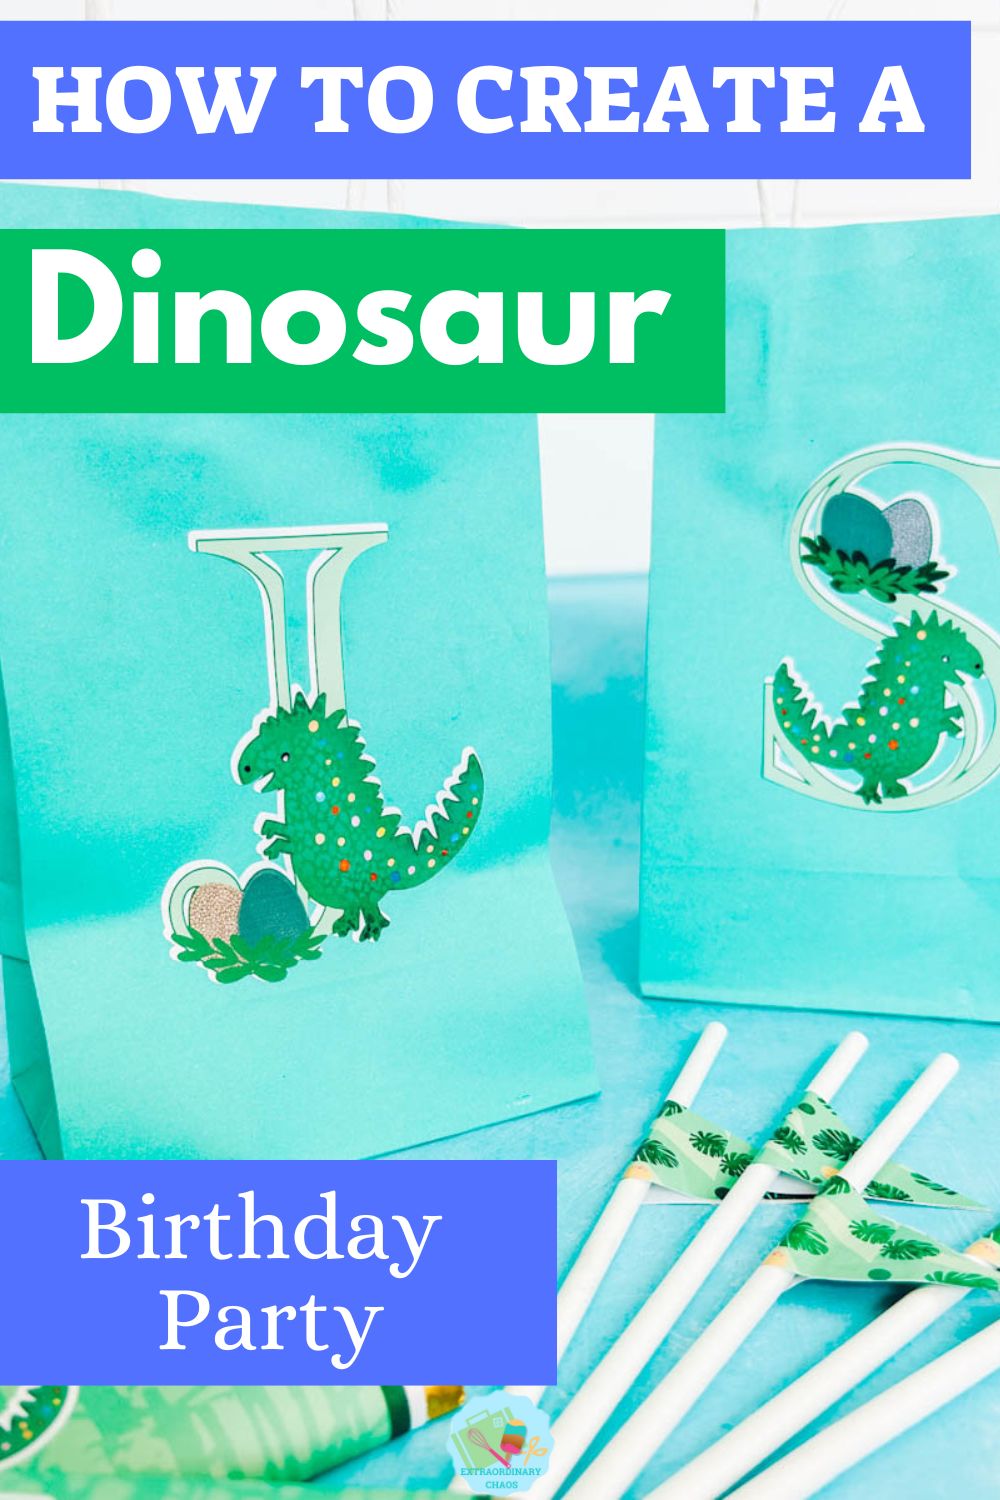 How to create a themed Dinosaur Birthday Party